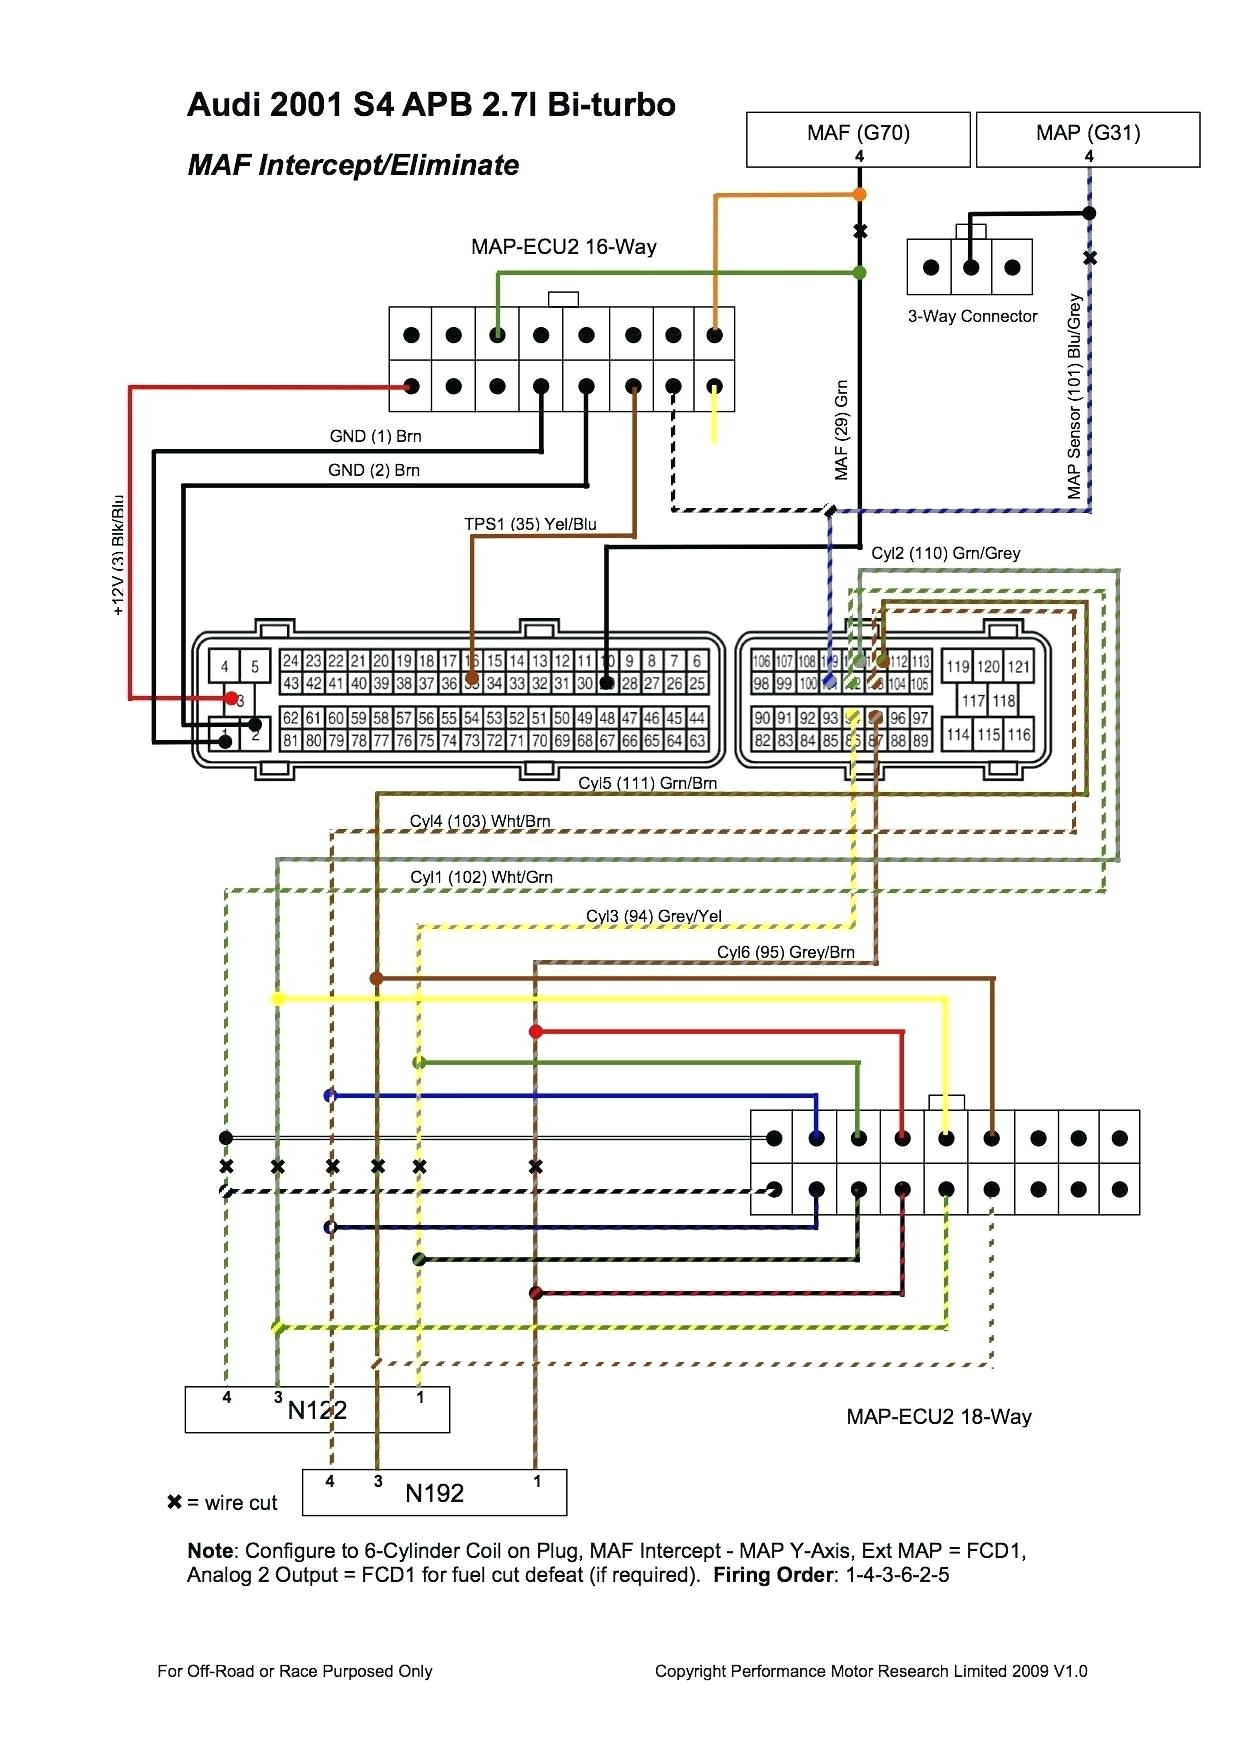 wiring diagrams for dodge trucks wiring diagram database 2005 dodge caravan radio wiring diagram